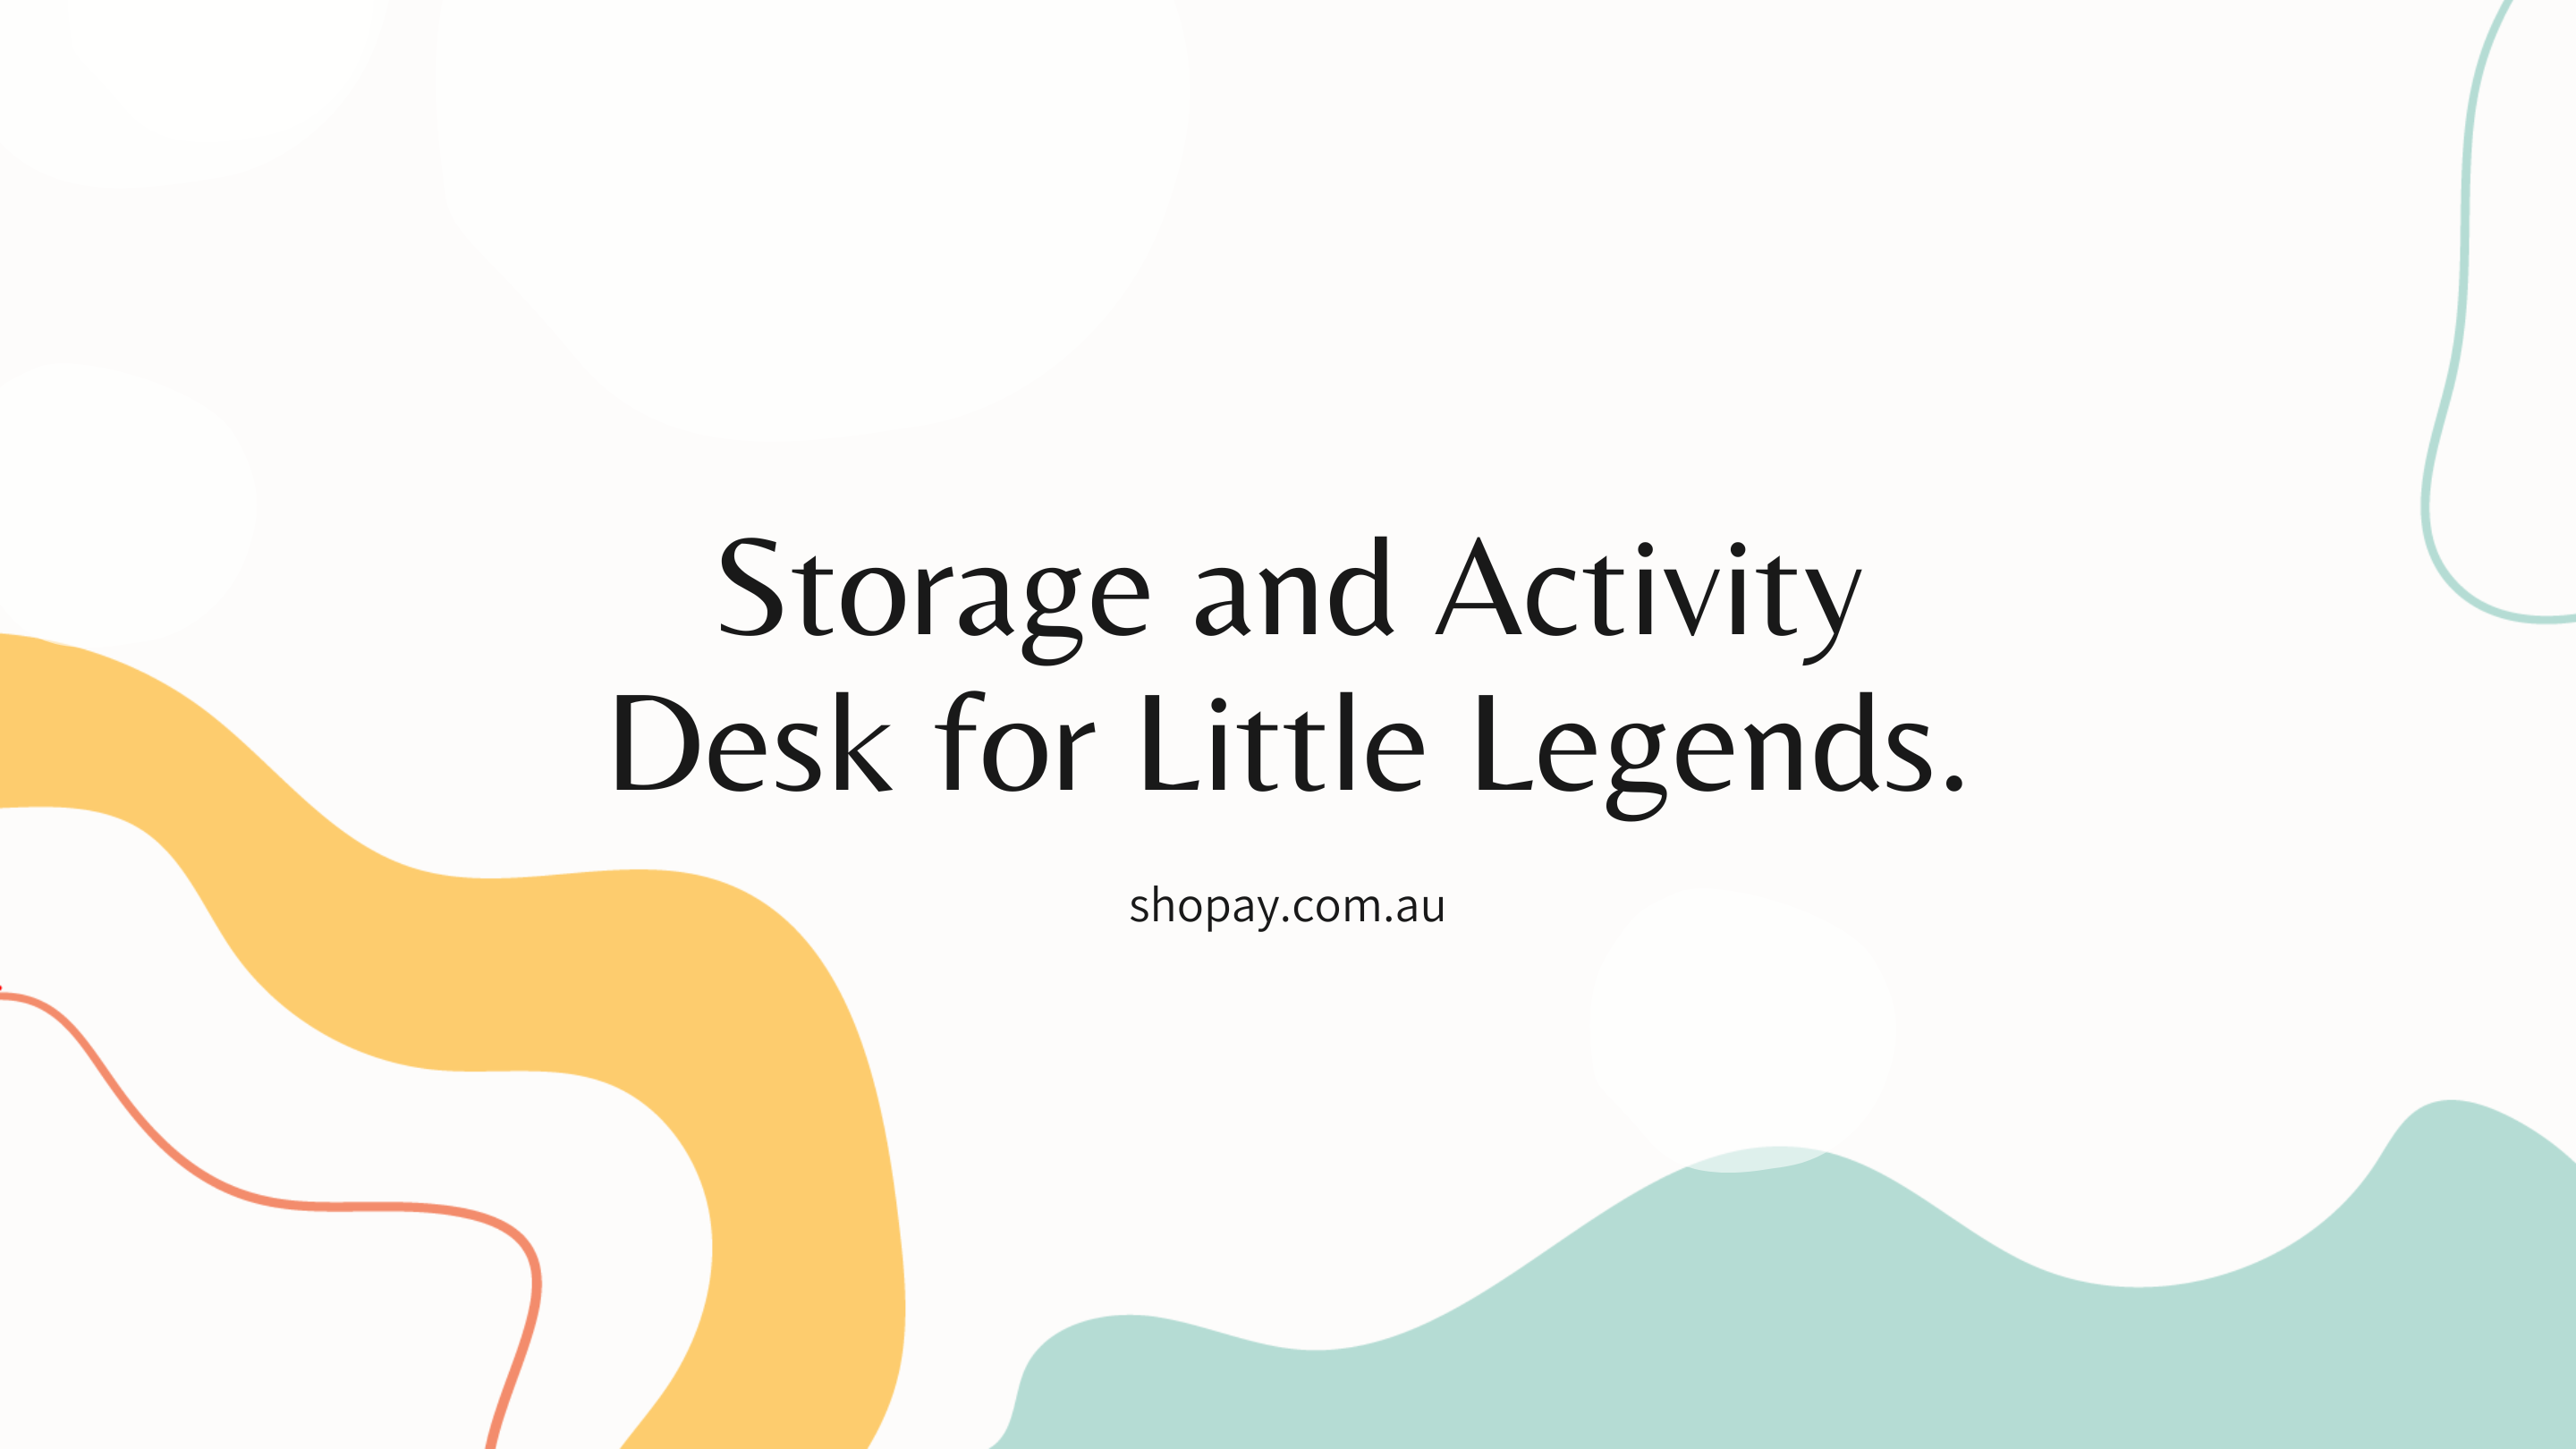 Kids Storage and Activity Desk Blog Post